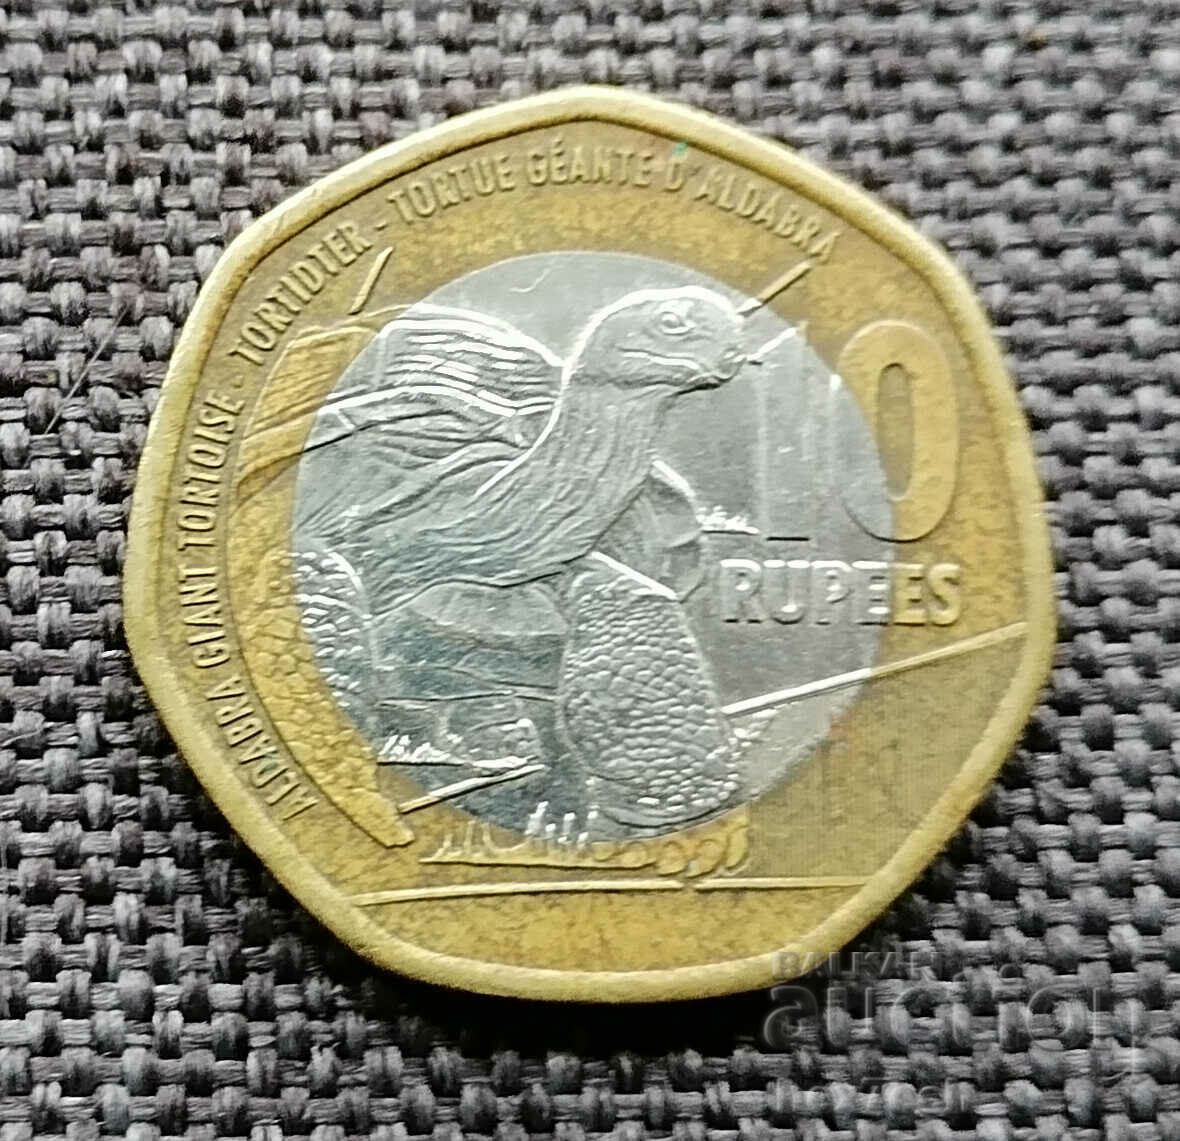 ❤️ ⭐ Coin Seychelles 2016 10 Rupees ⭐ ❤️